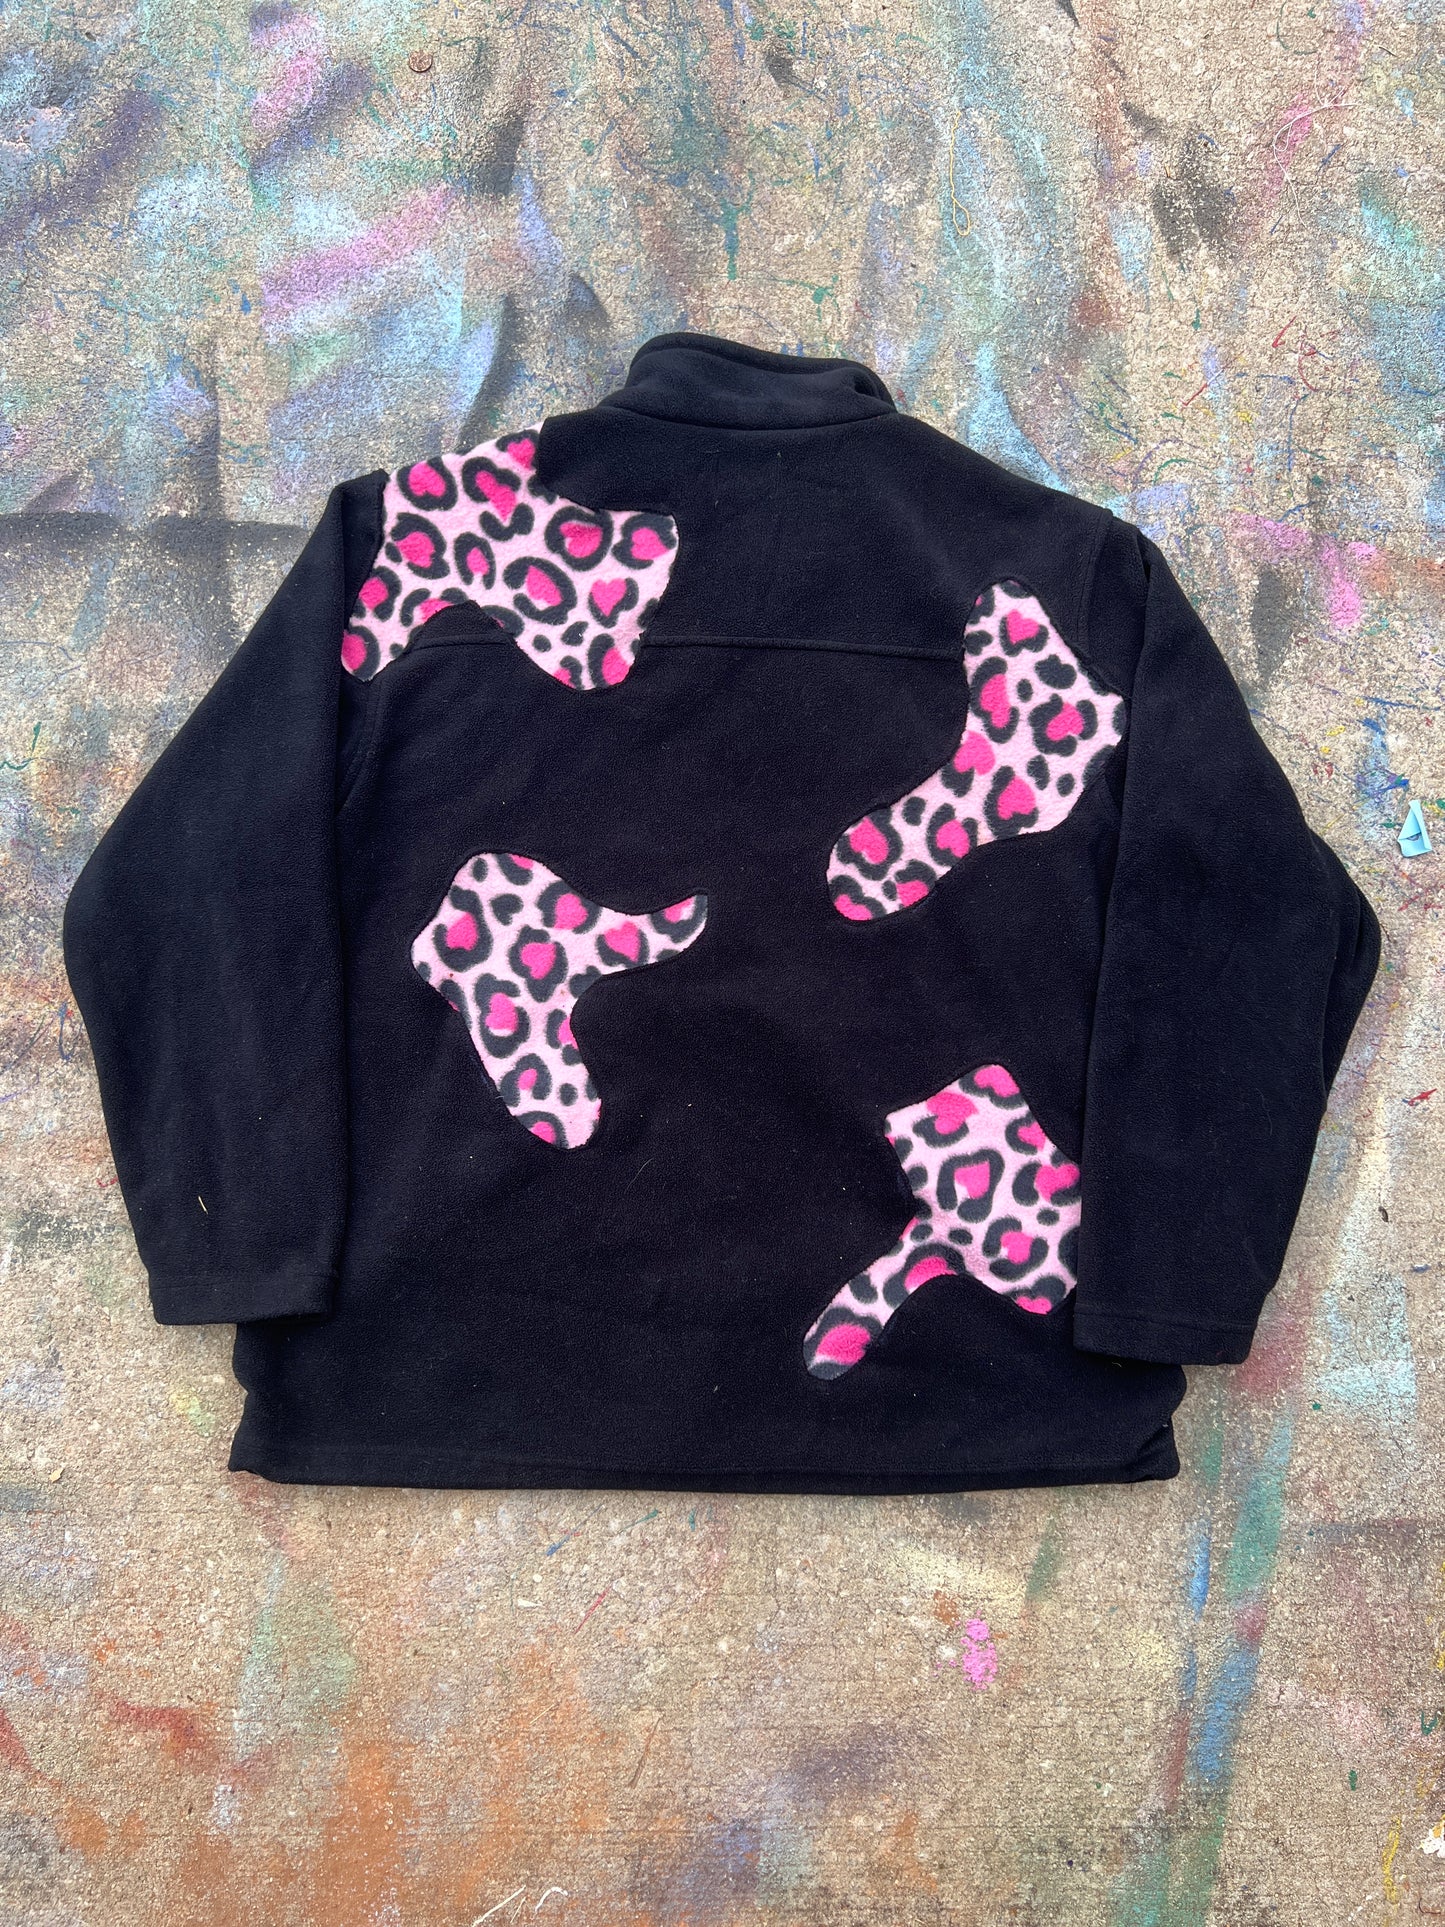 Scab Patches Quarterzip (Pink Cheetah/Black)- XXL